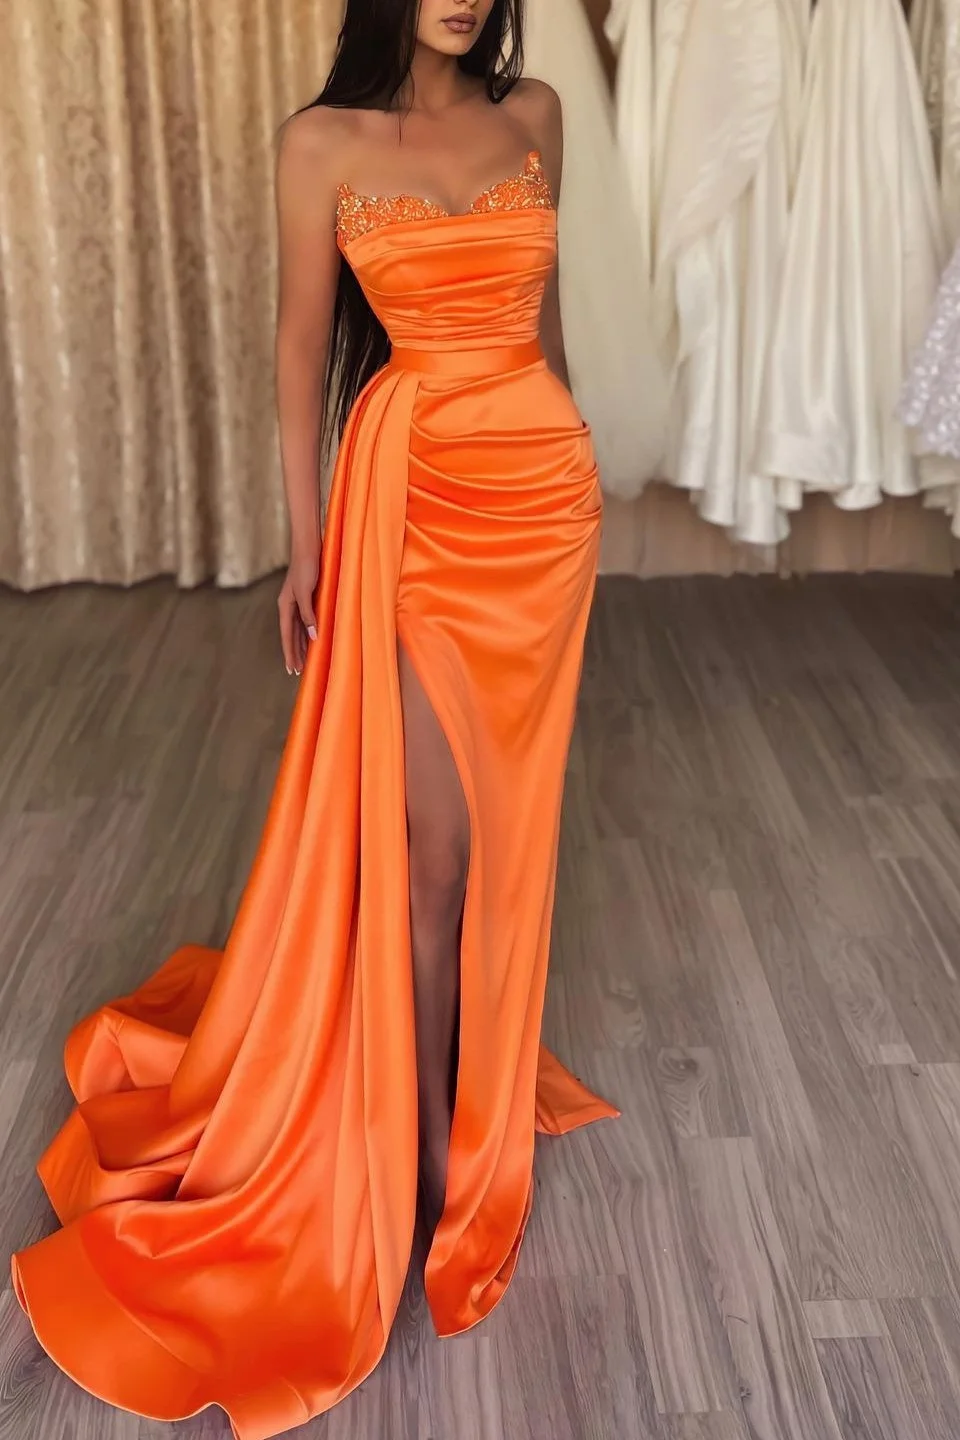 Bellasprom Orange Mermaid Prom Dress Split Long With Sequins Ruffles Sweetheart Bellasprom